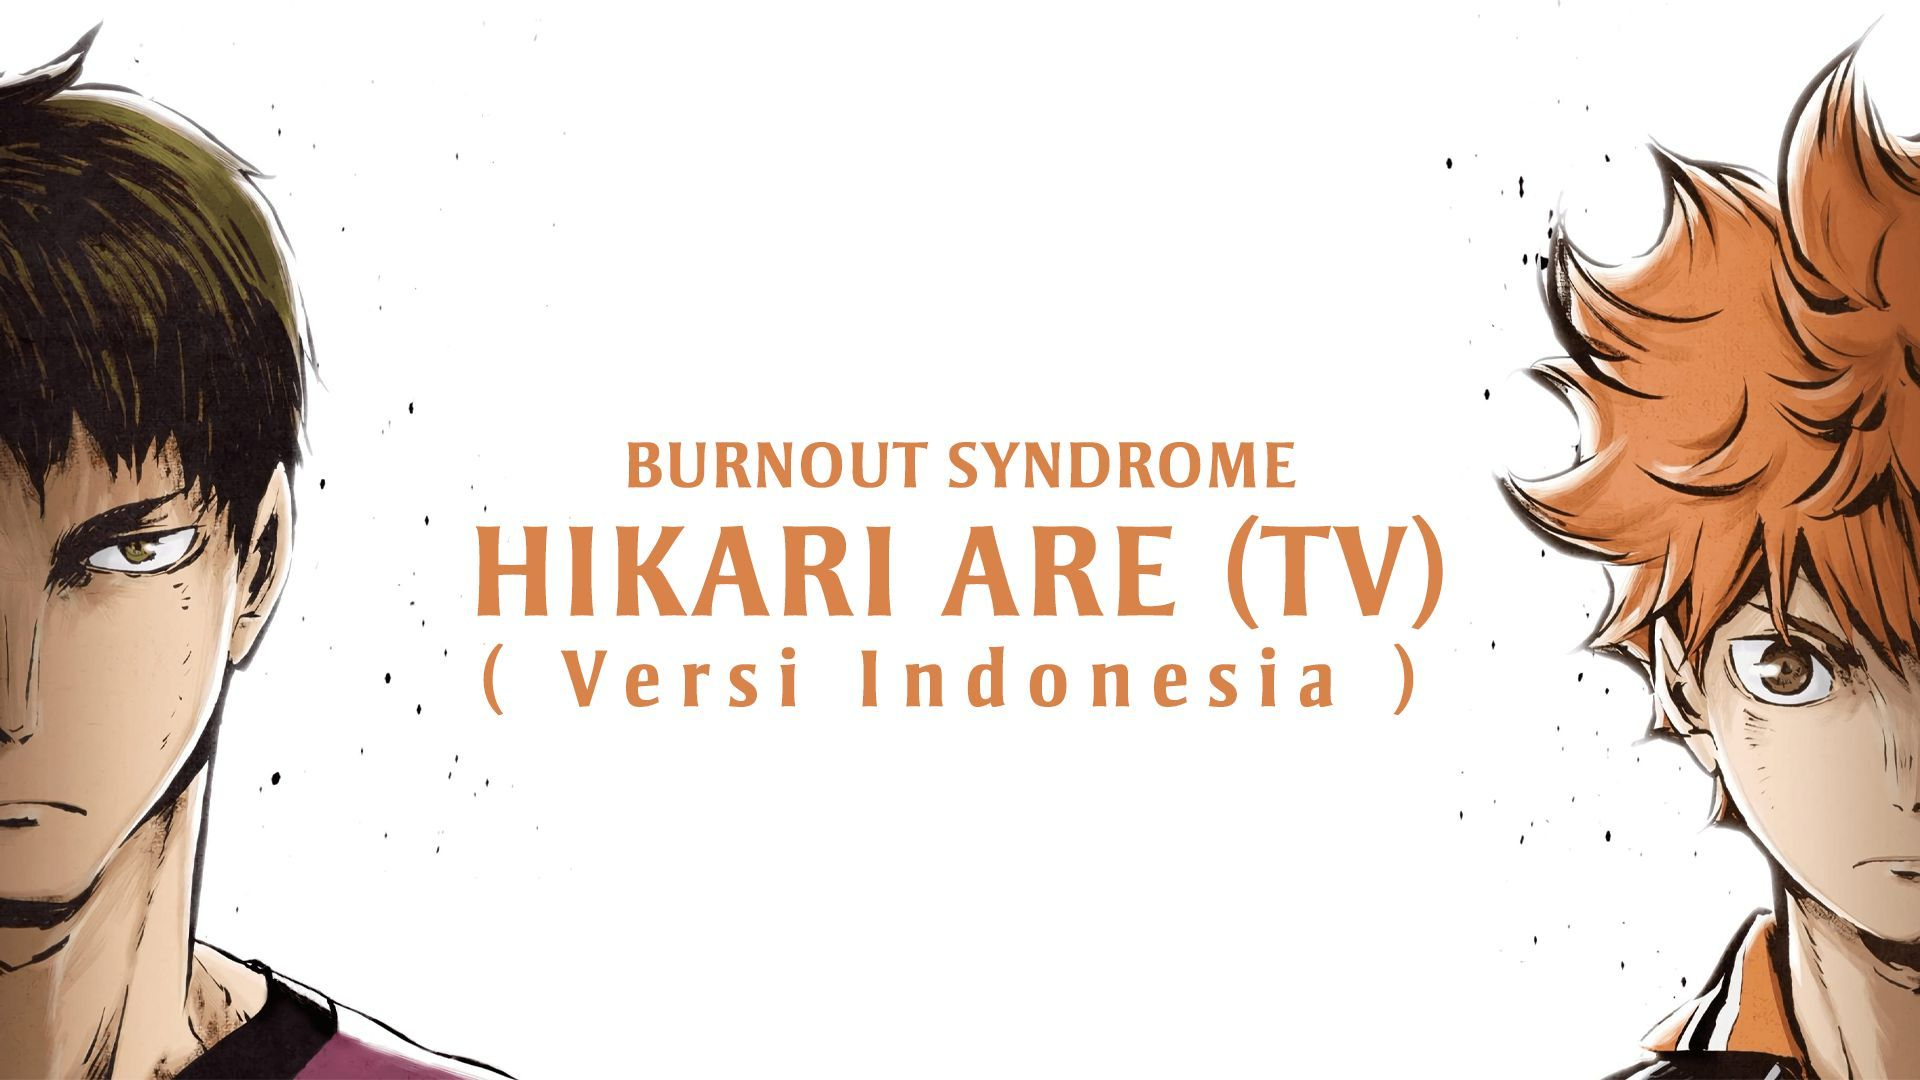 Haikyuu!! 3rd Season Opening 1 “Hikari Are” (BURNOUT SYNDROMES) 